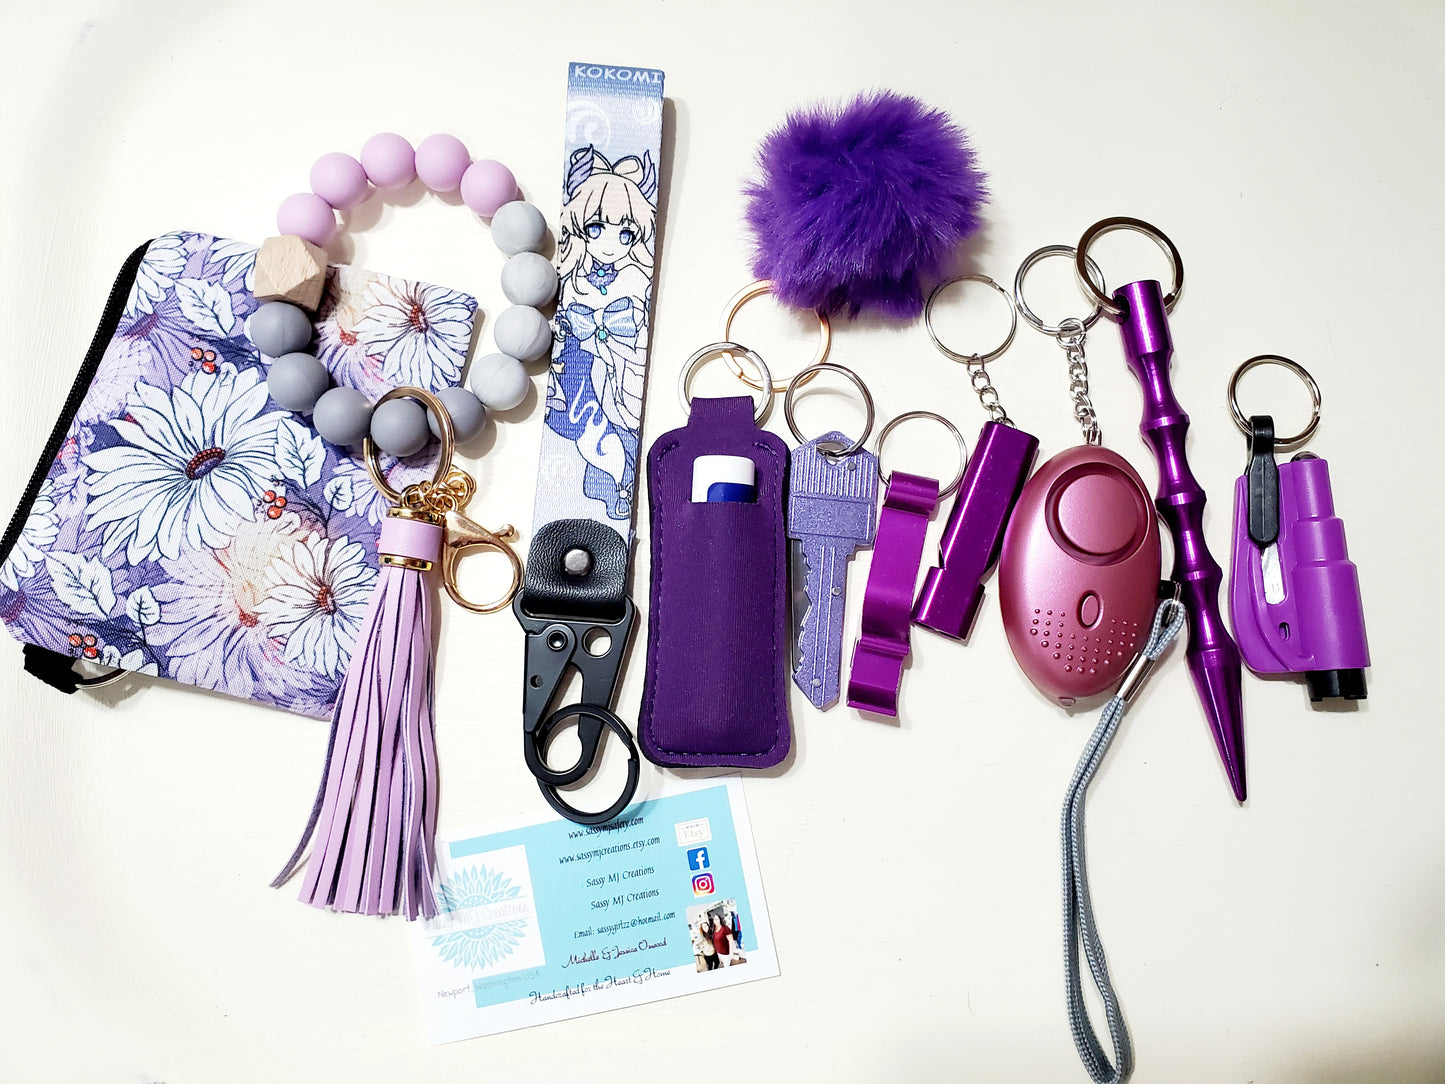 Cartoon Anime Wrist Strap Safety Keychain - Personal Safety Kit 12 pc set - Purple